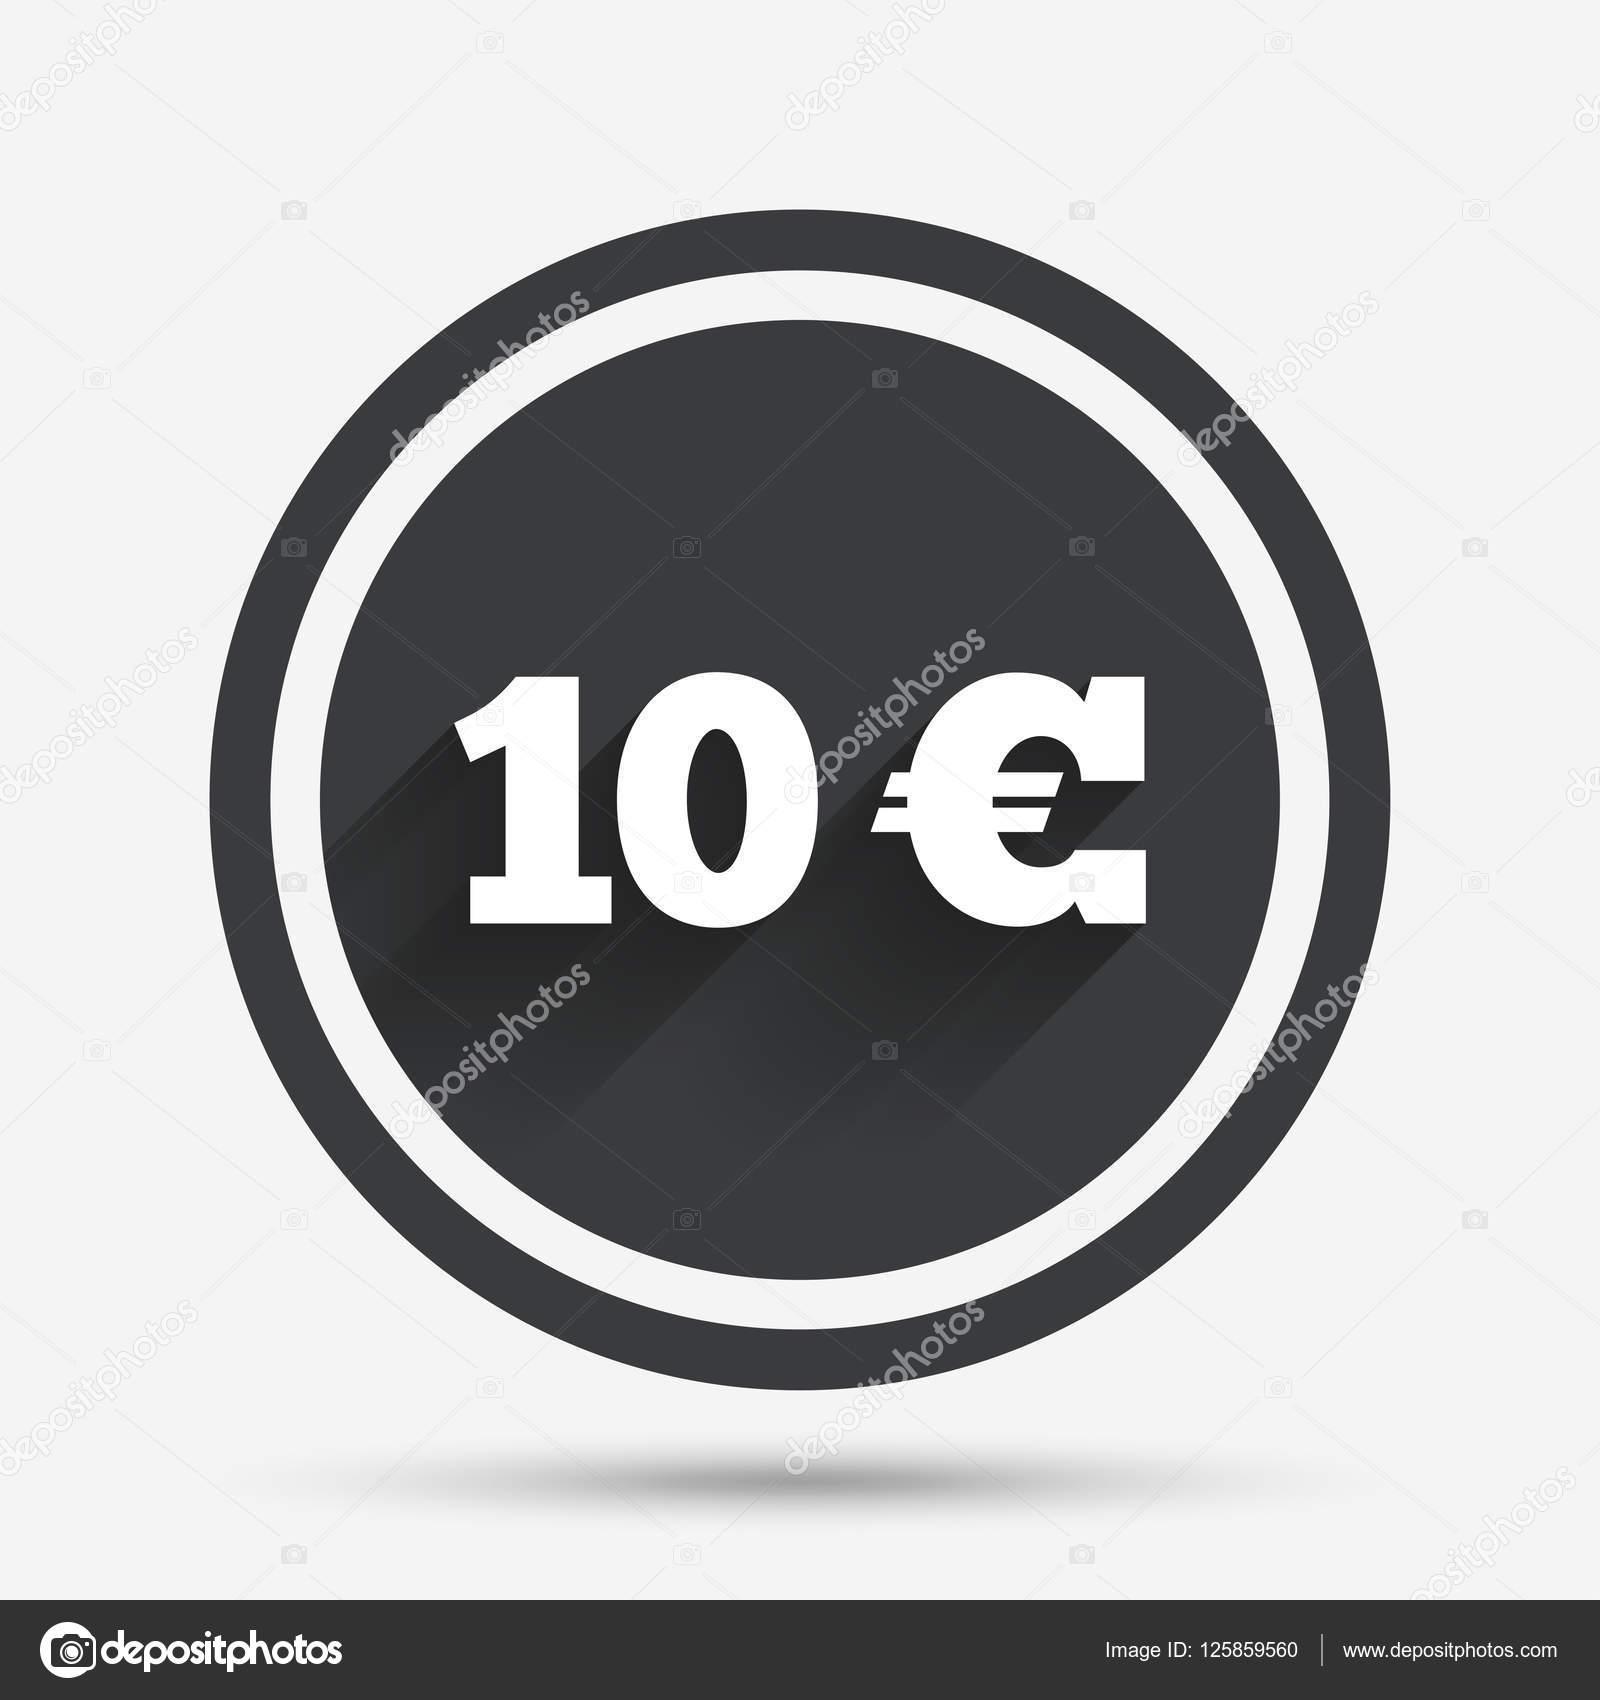 https://st3.depositphotos.com/1915171/12585/v/1600/depositphotos_125859560-stock-illustration-10-euro-sign-icon-eur.jpg